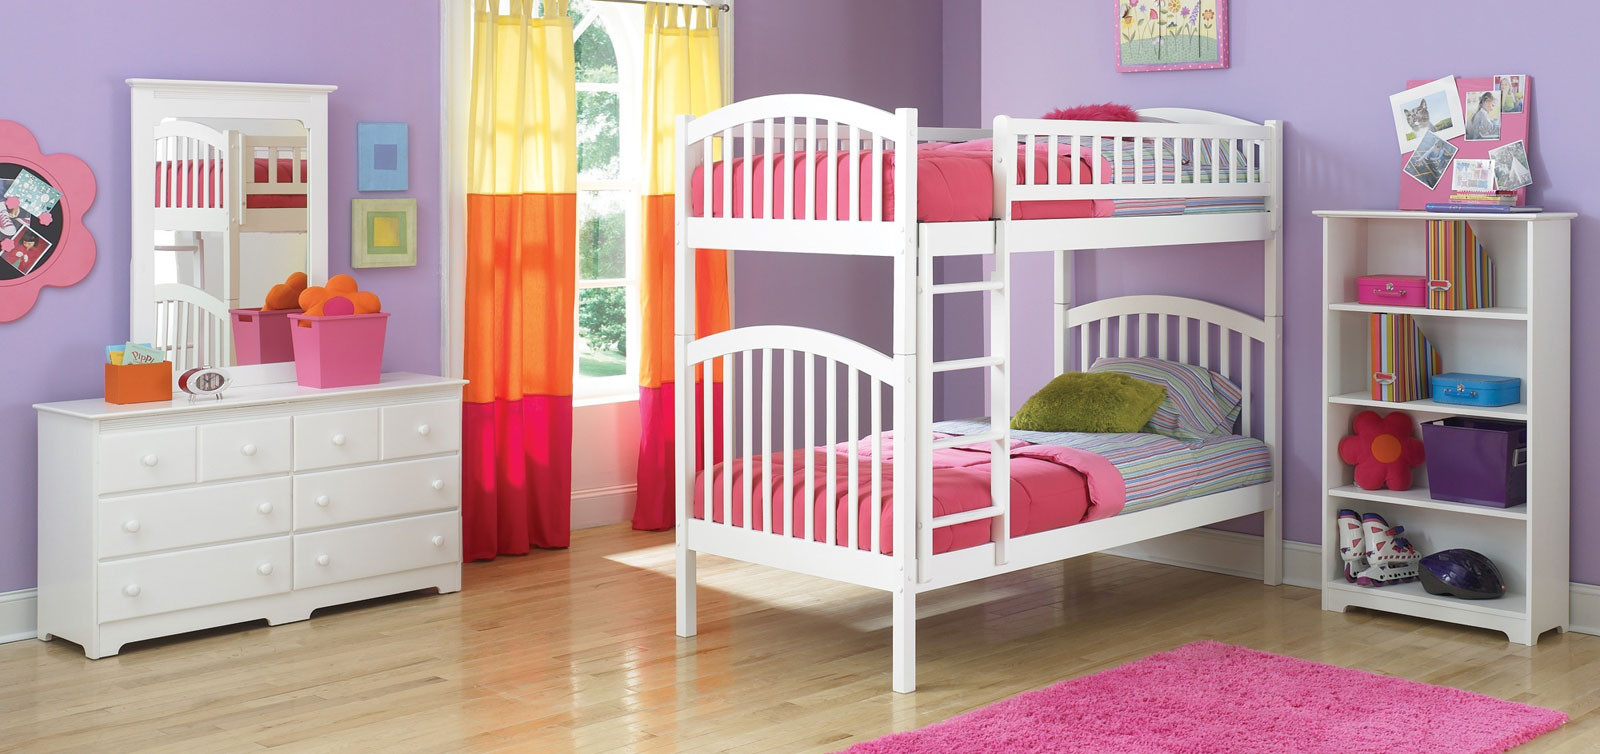 Kids Bunk Bed Bedroom Sets
 Girls Bedroom Furniture The Beach Condo Ideas Amaza Design